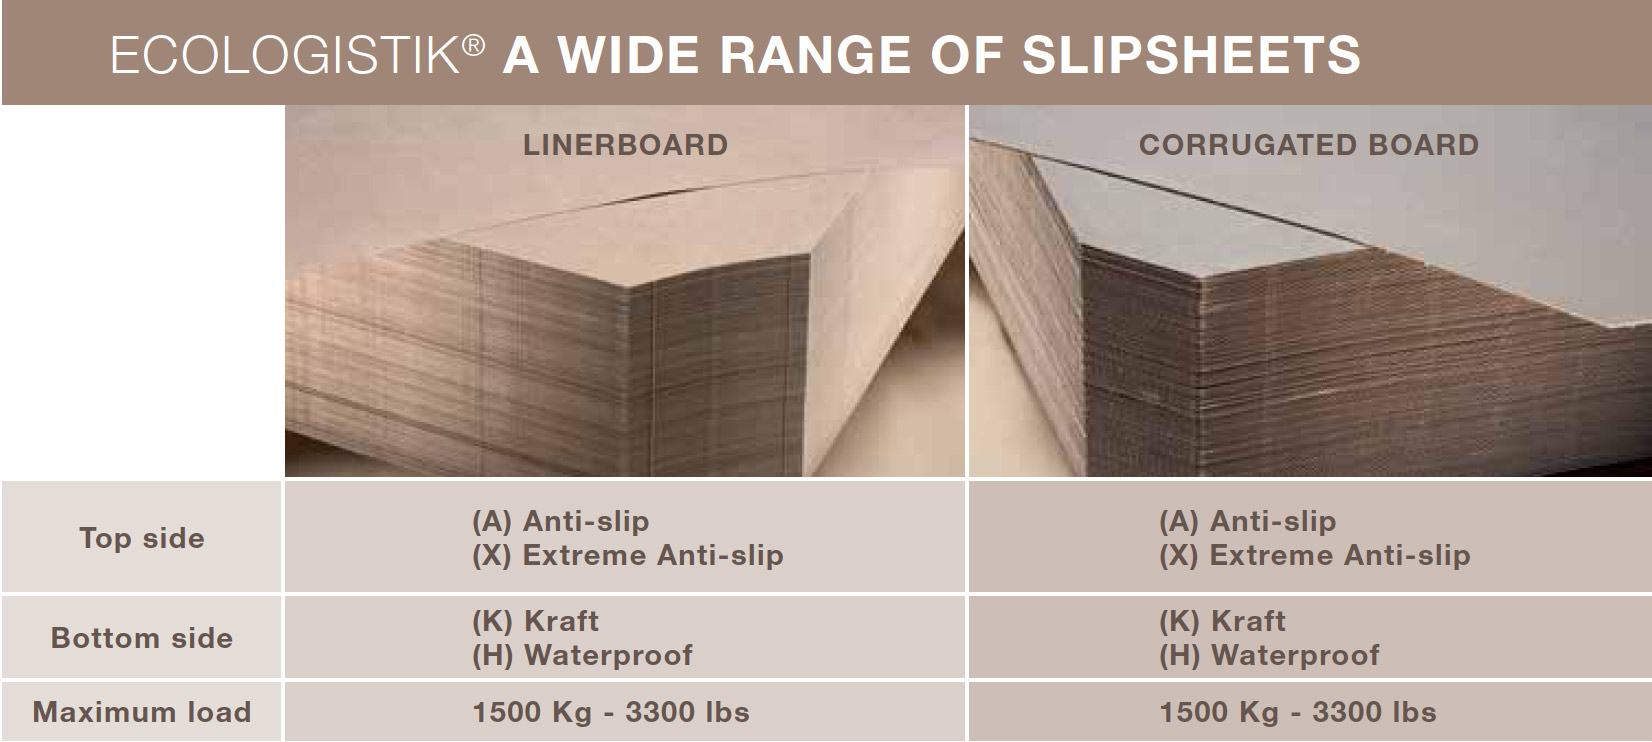 Slipsheet product range and max load